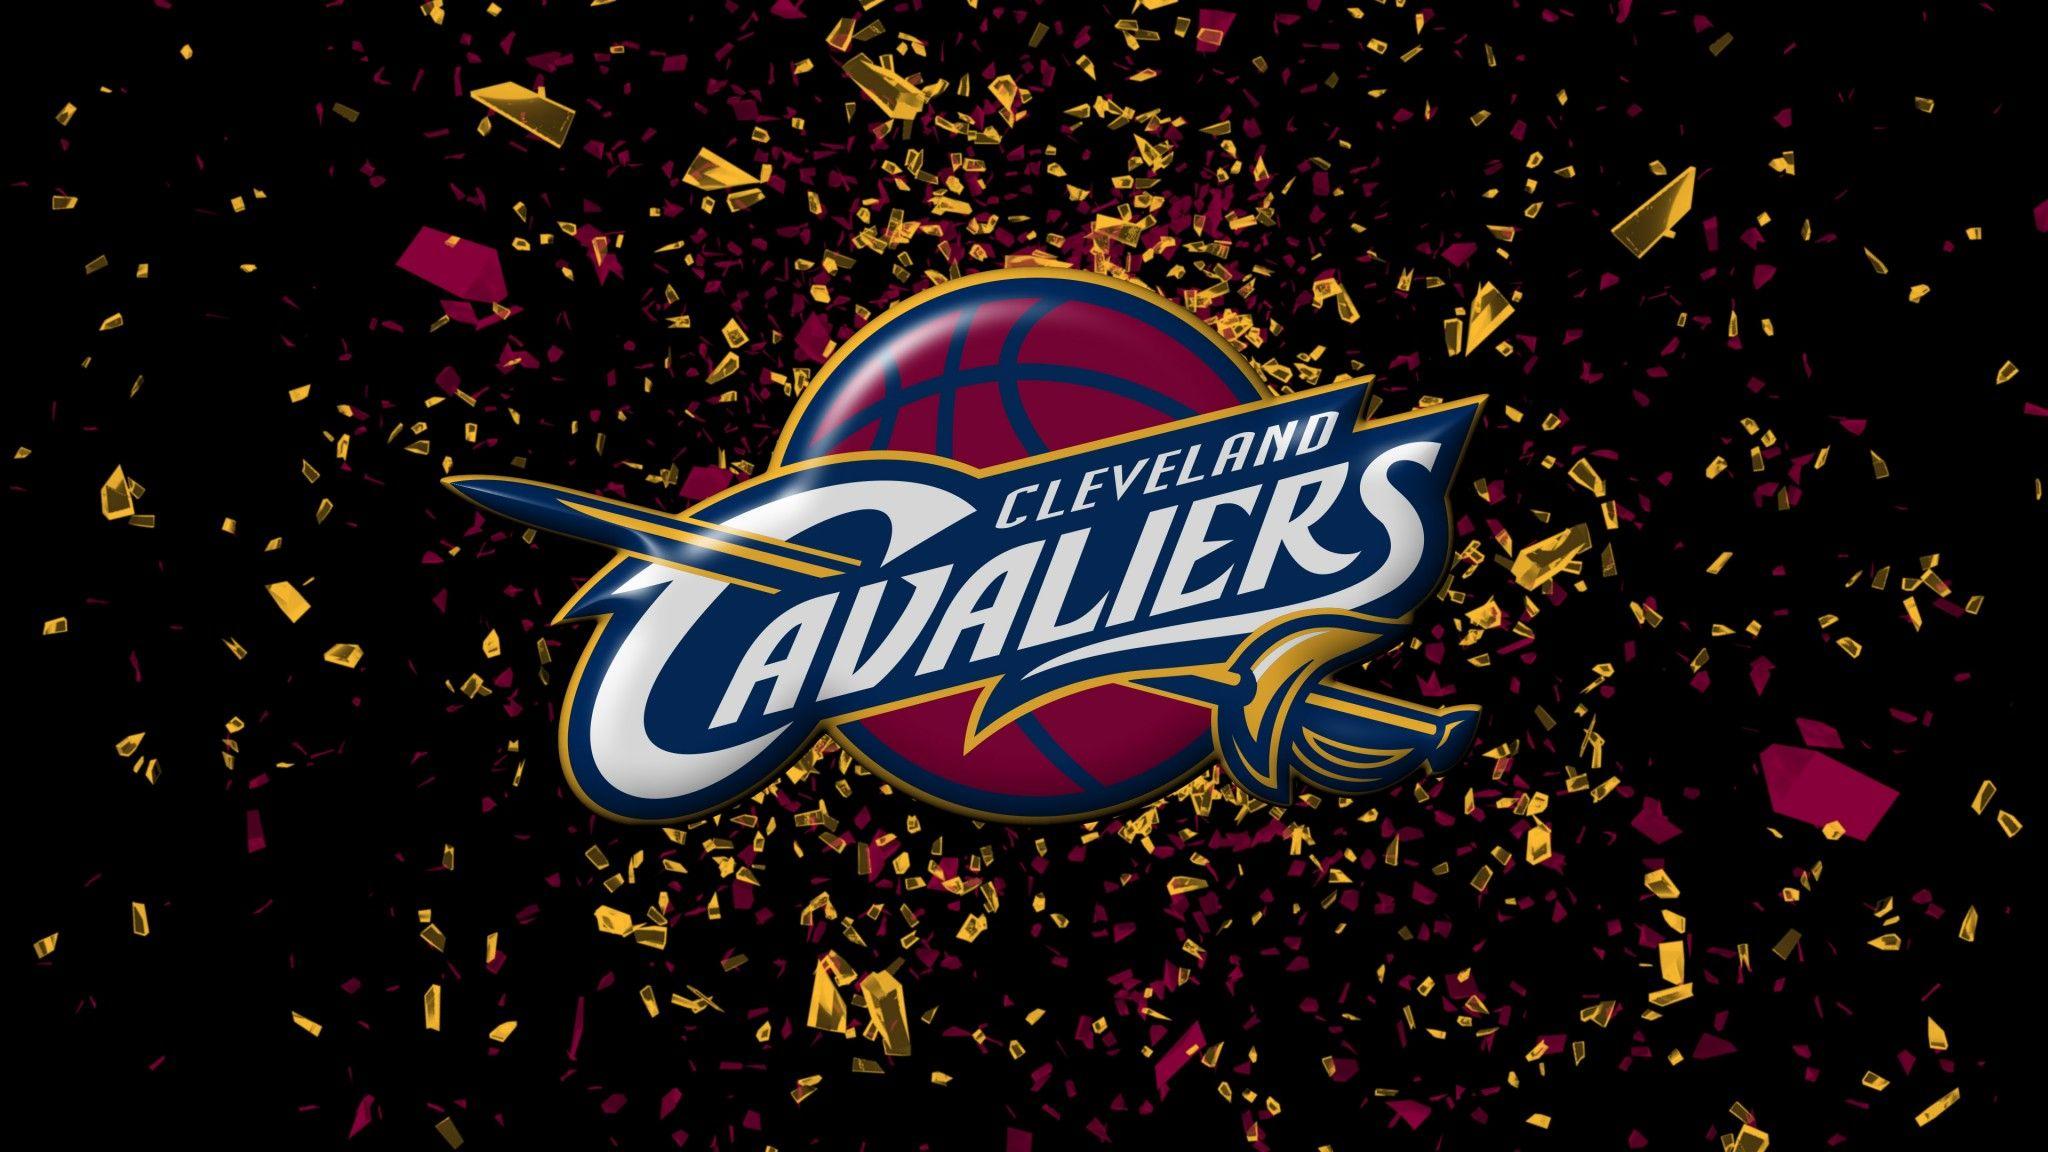 Cleveland Cavaliers Logo Wallpaper Free Download. Wallpaper